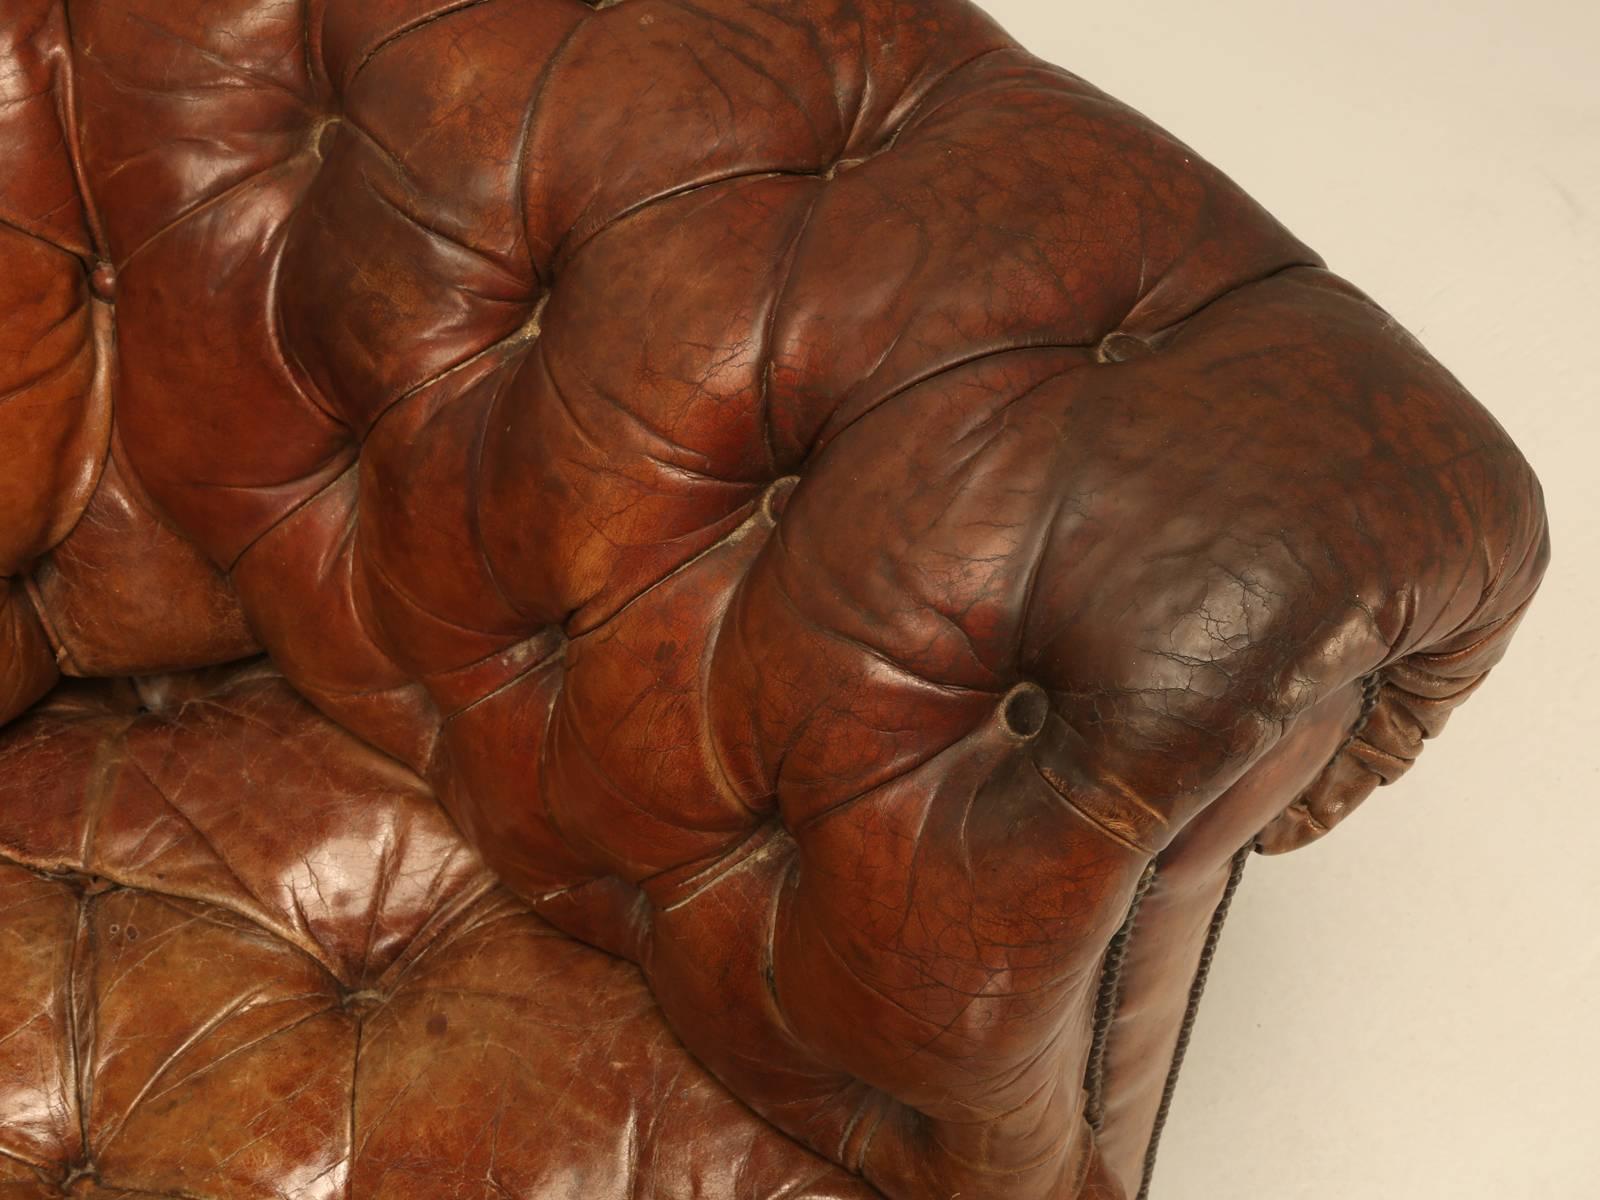 chesterfield sofa original